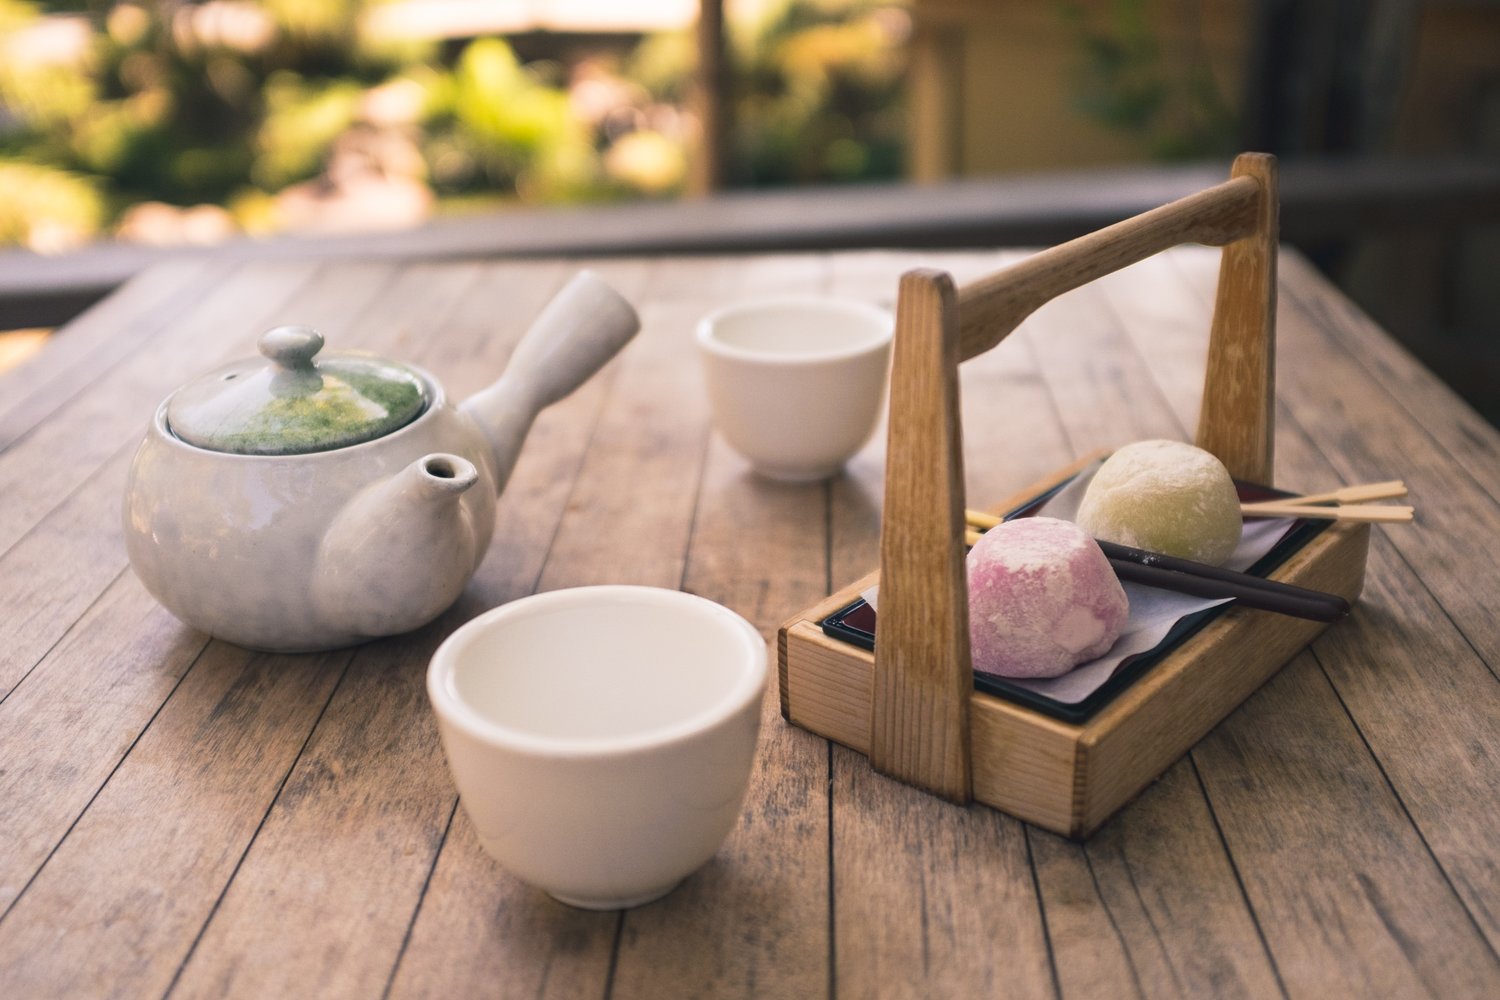 Tea Ceremony (茶道 Cha-do)- The Art of Tea, The Way of Life